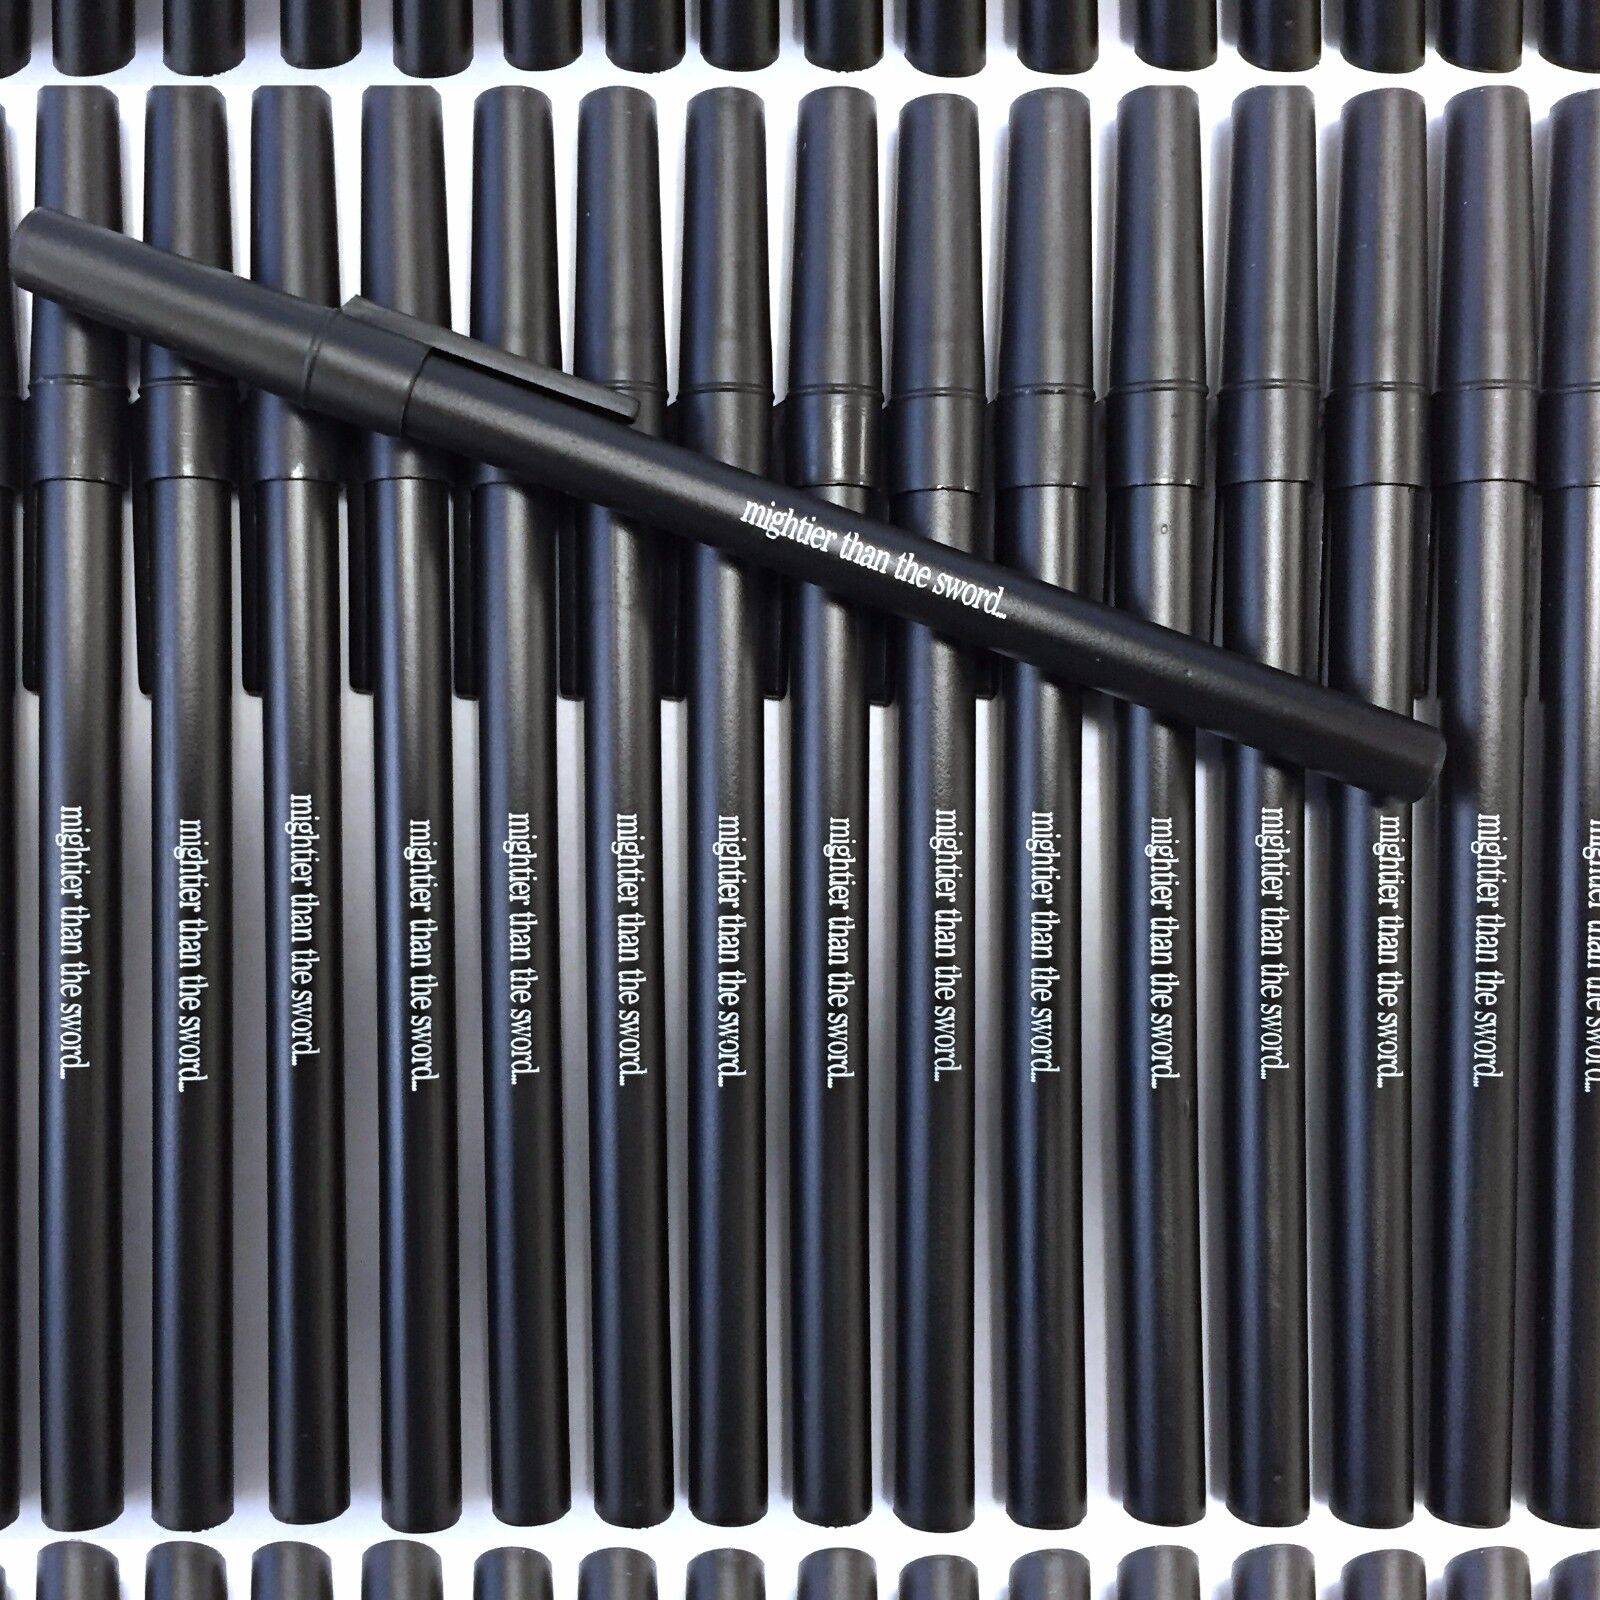 Misprint Pens 300 pc Ball Point Ink Wholesale Lot Bic Round Stic Style Black Cap